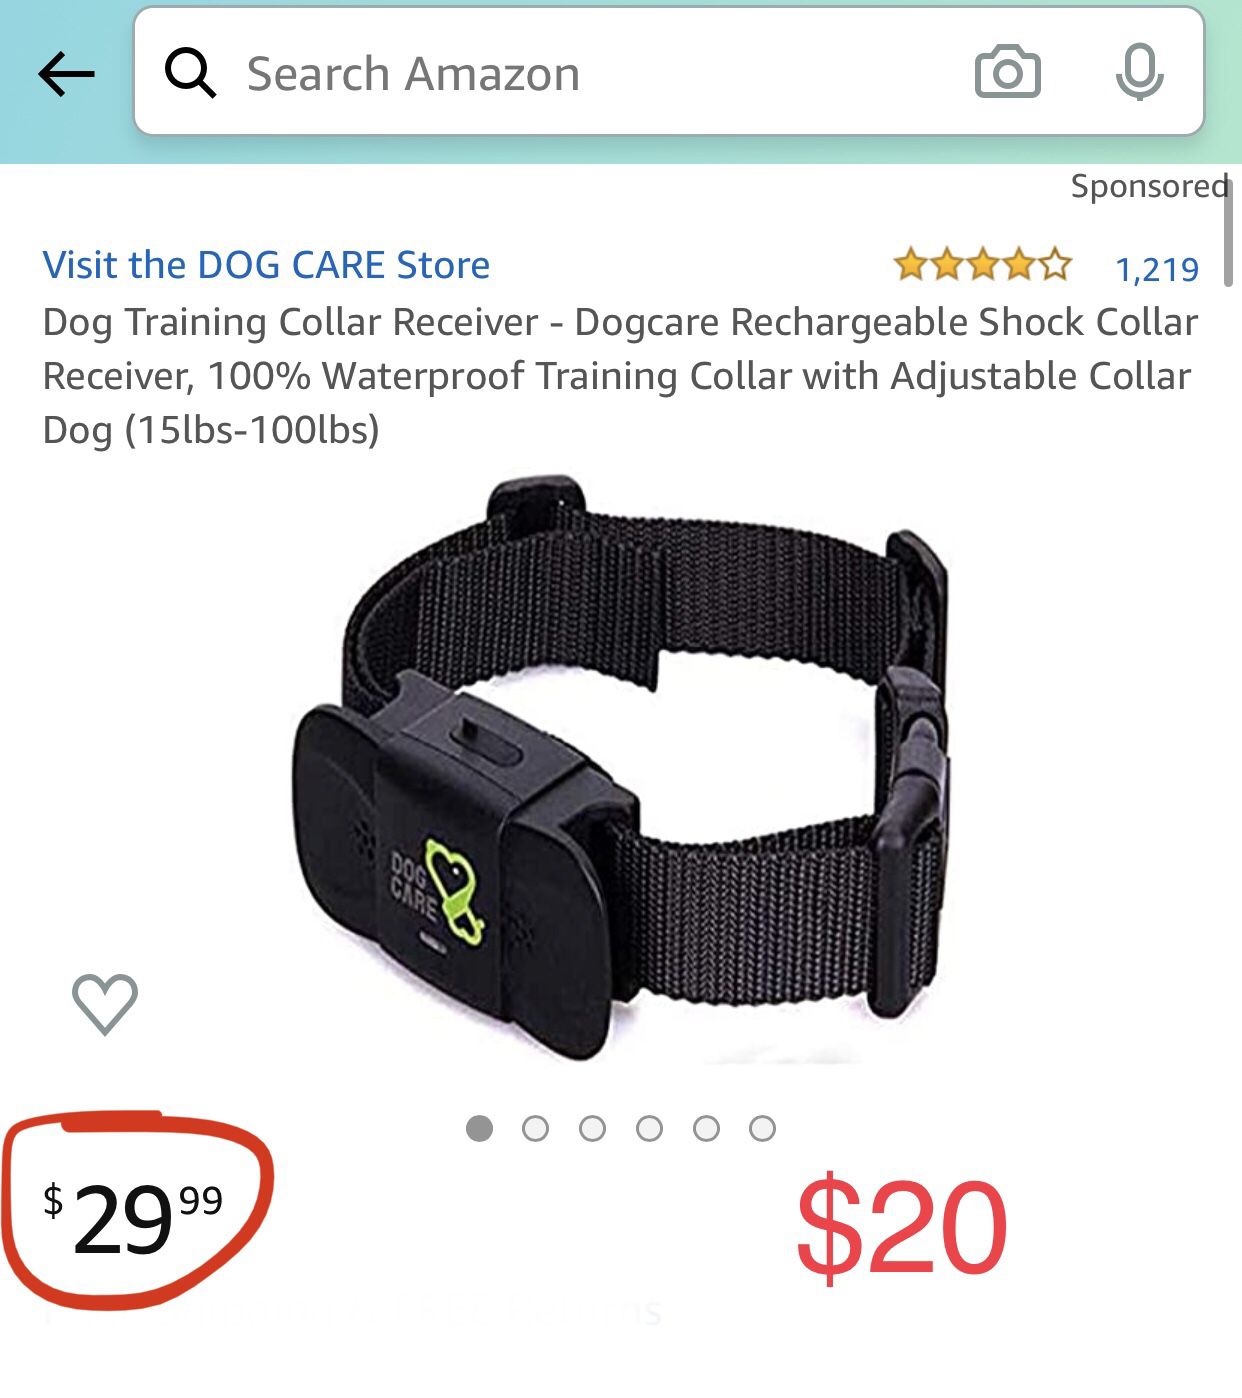 Dog Training Collar Receiver - Dogcare Rechargeable Shock Collar Receiver, 100% Waterproof Training Collar with Adjustable Collar Dog (15lbs-100lbs)